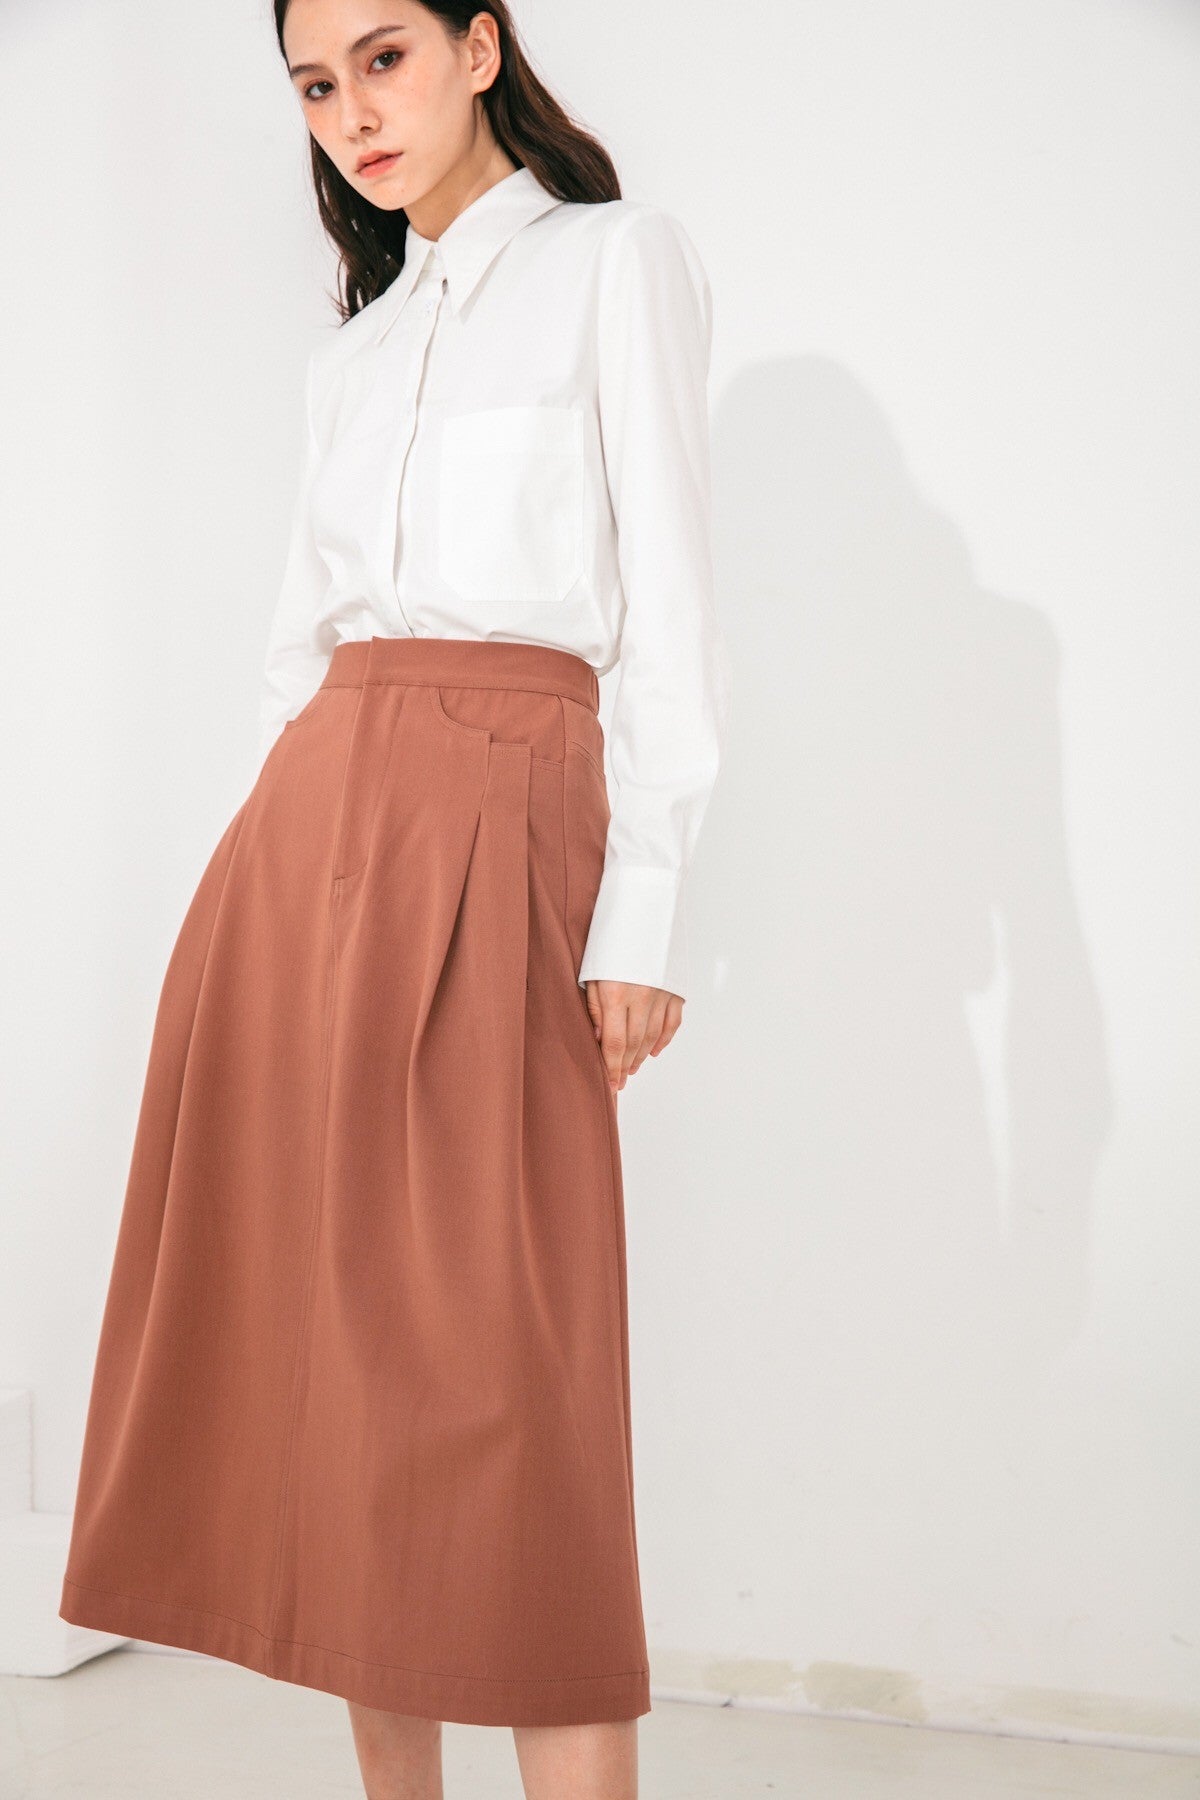 SKYE San Francisco SF shop ethical modern minimalist quality women clothing fashion Audrey Shirt white 2